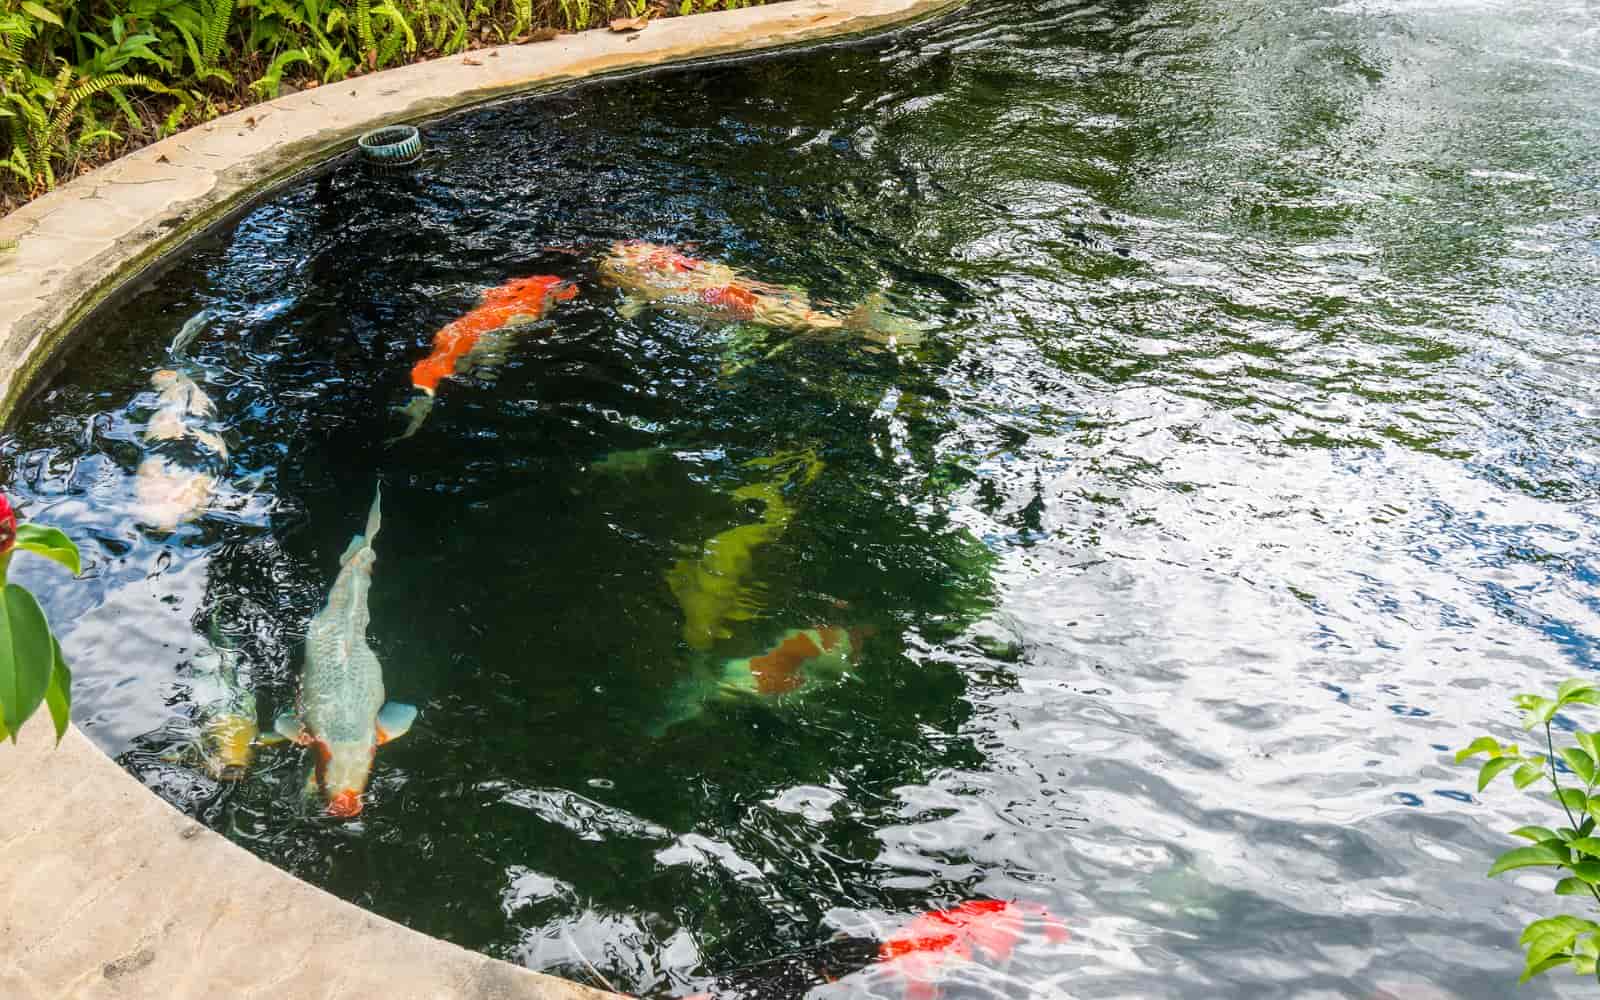 3. Backyard Pond With Fish